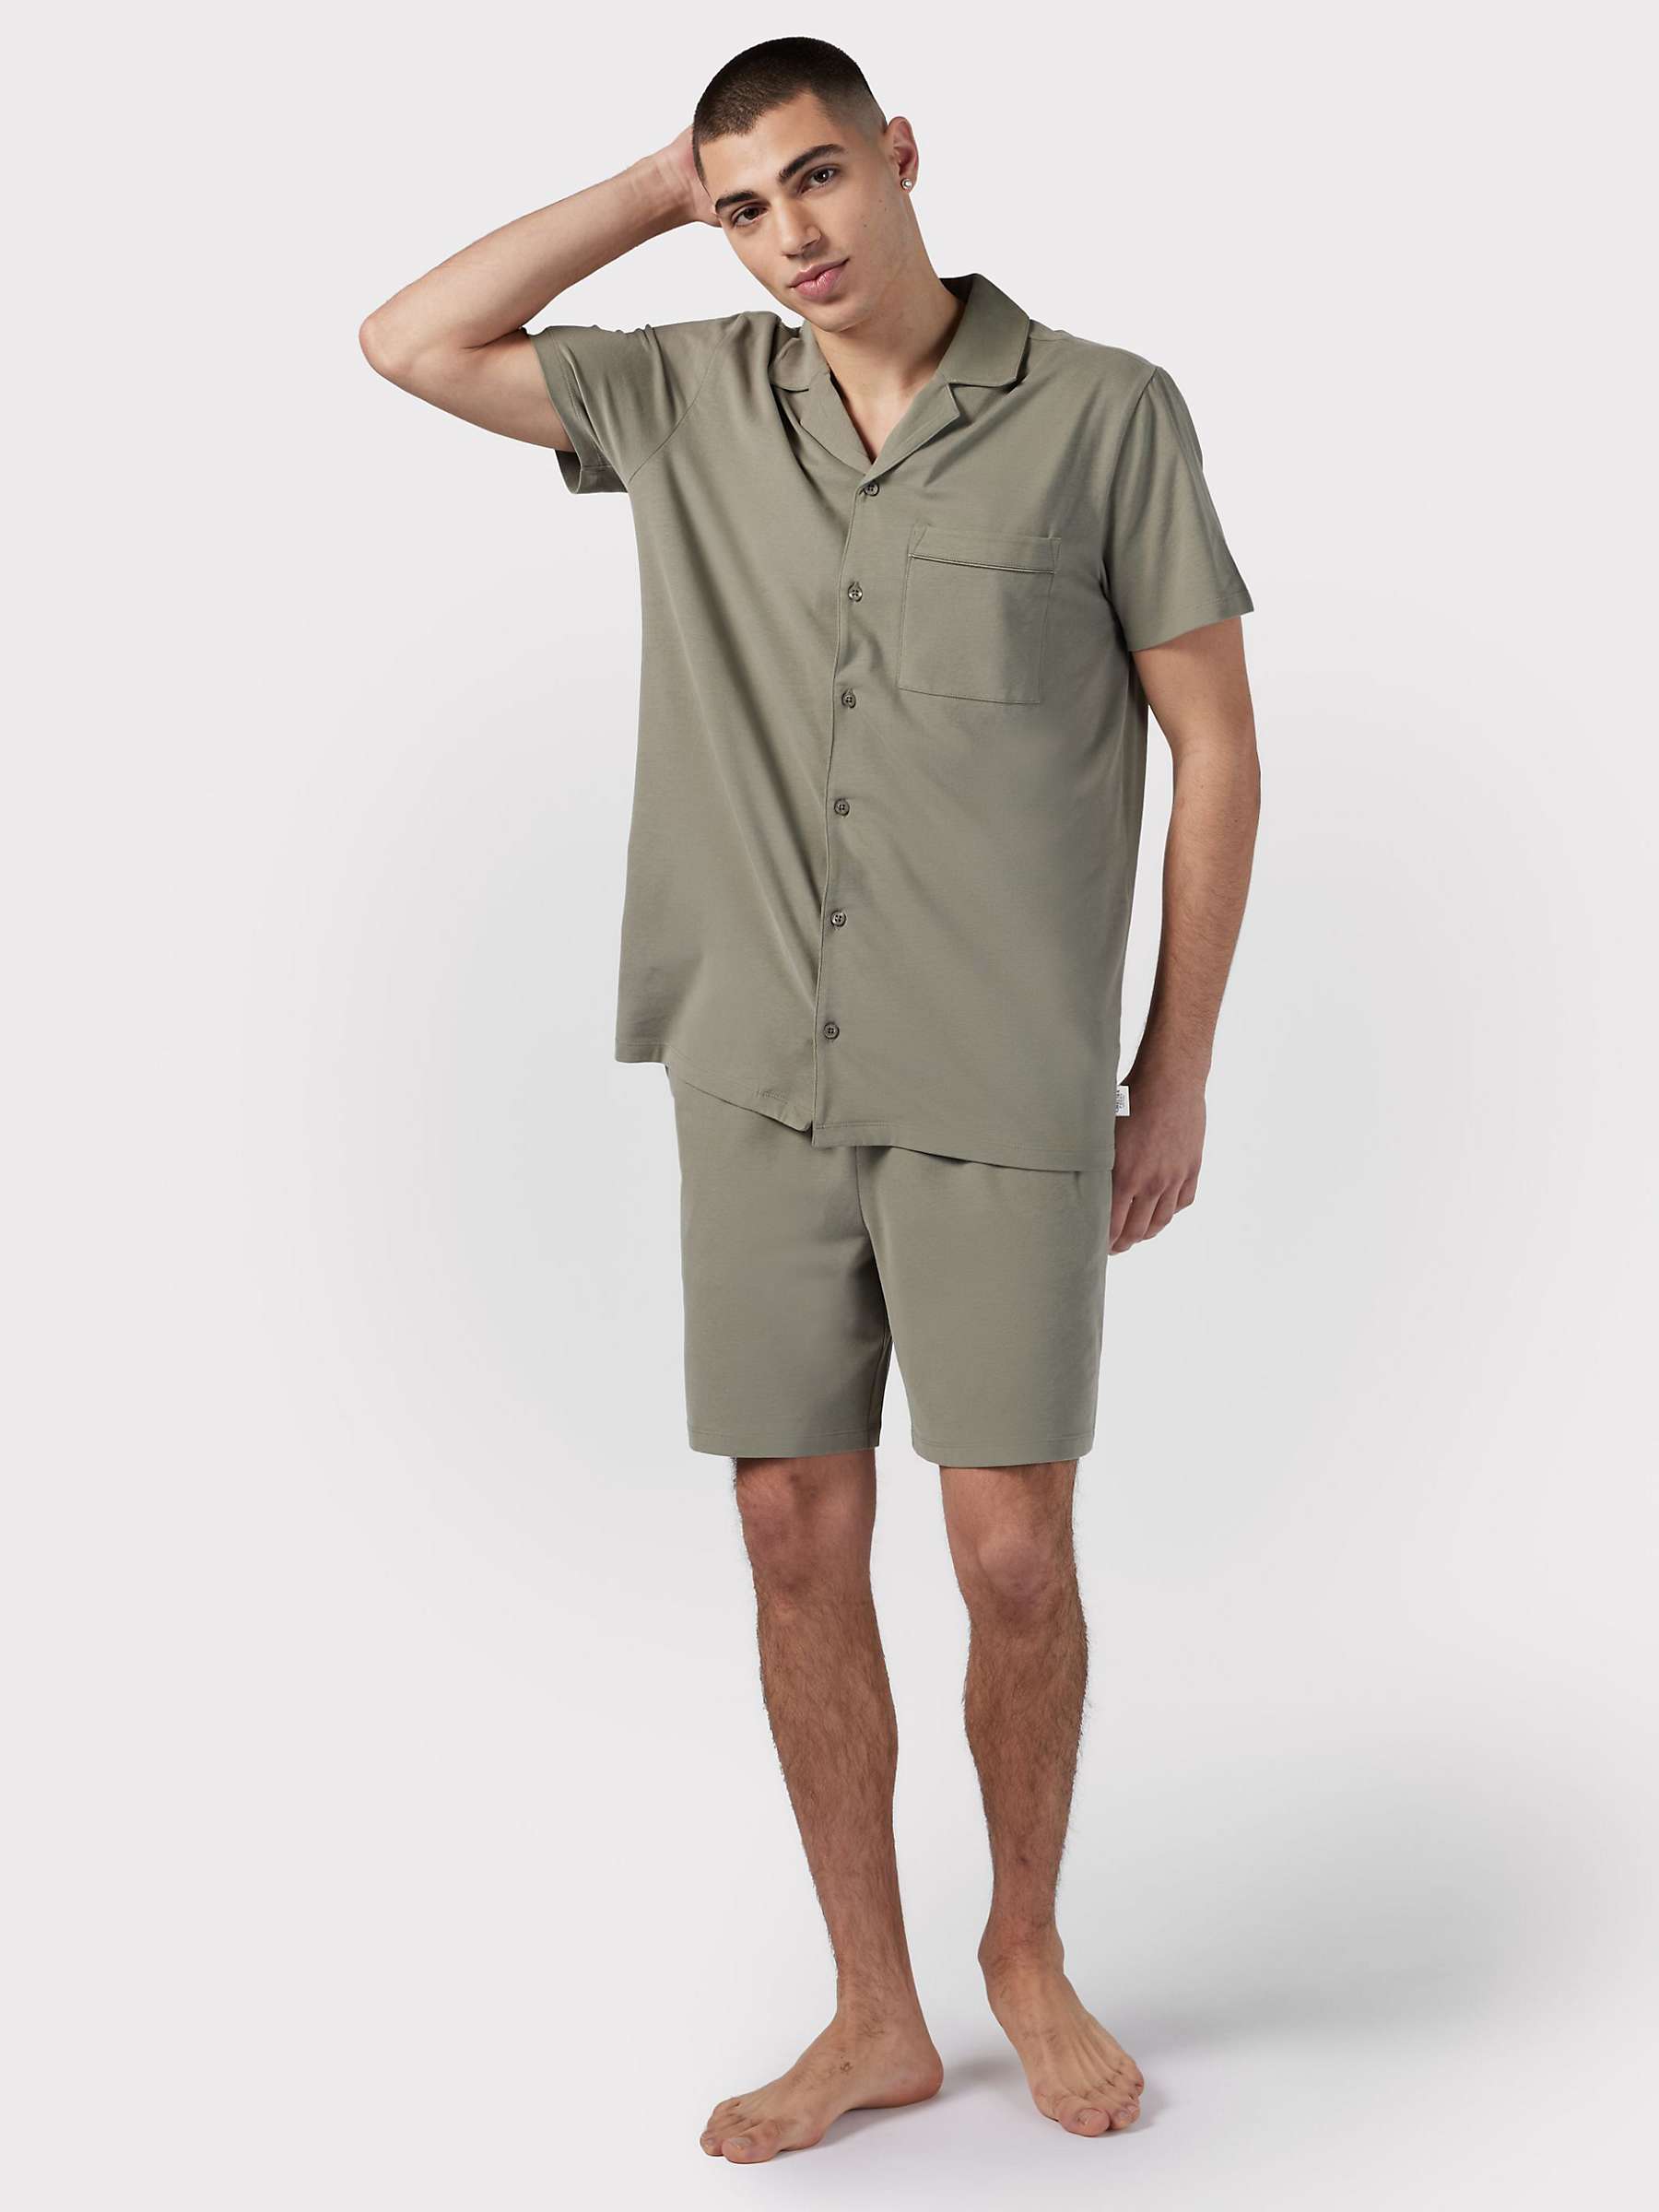 Buy Chelsea Peers Organic Cotton Shorts Pyjama Set Online at johnlewis.com